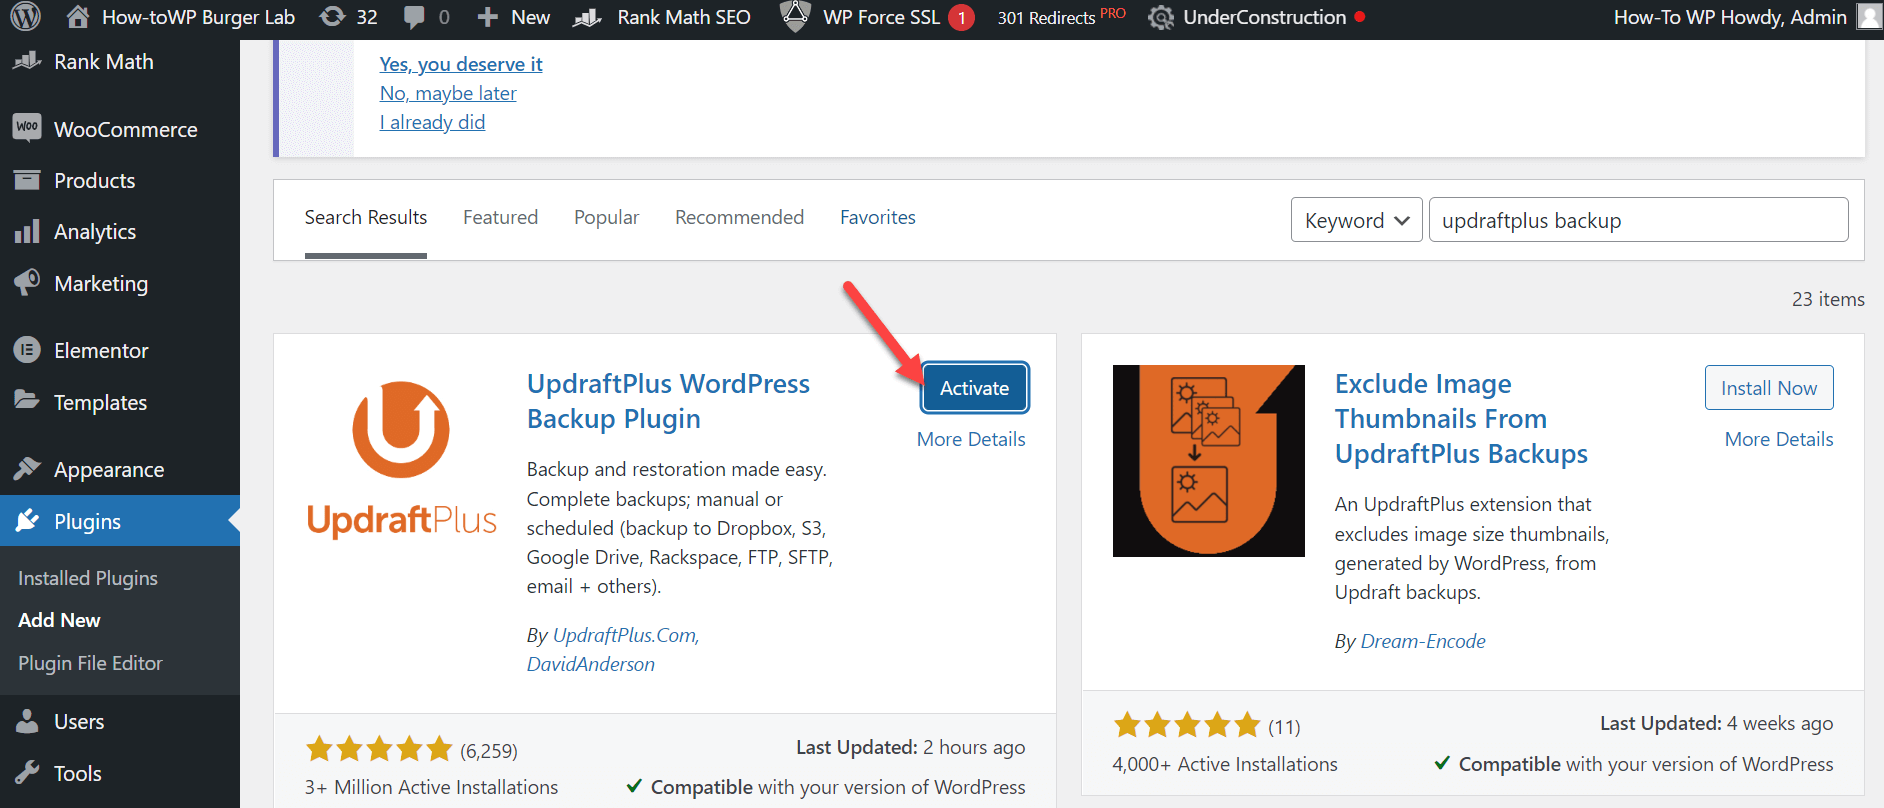 Activate The Updraftplus Wordpress Backup Plugin